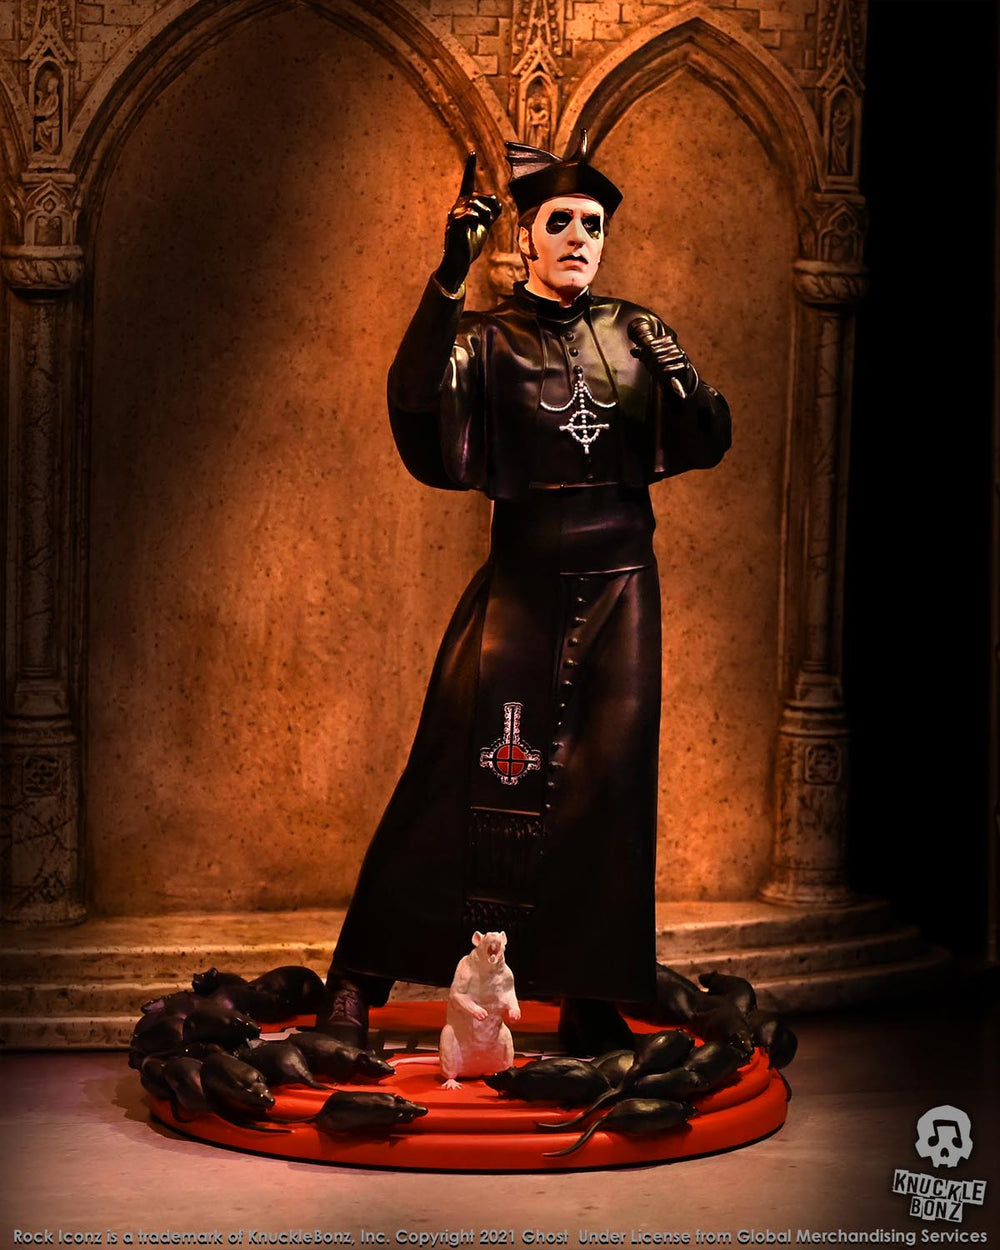 Ghost 2021 KnuckleBonz Rock Iconz Statue Cardinal Copia Black Tuxedo -Variant